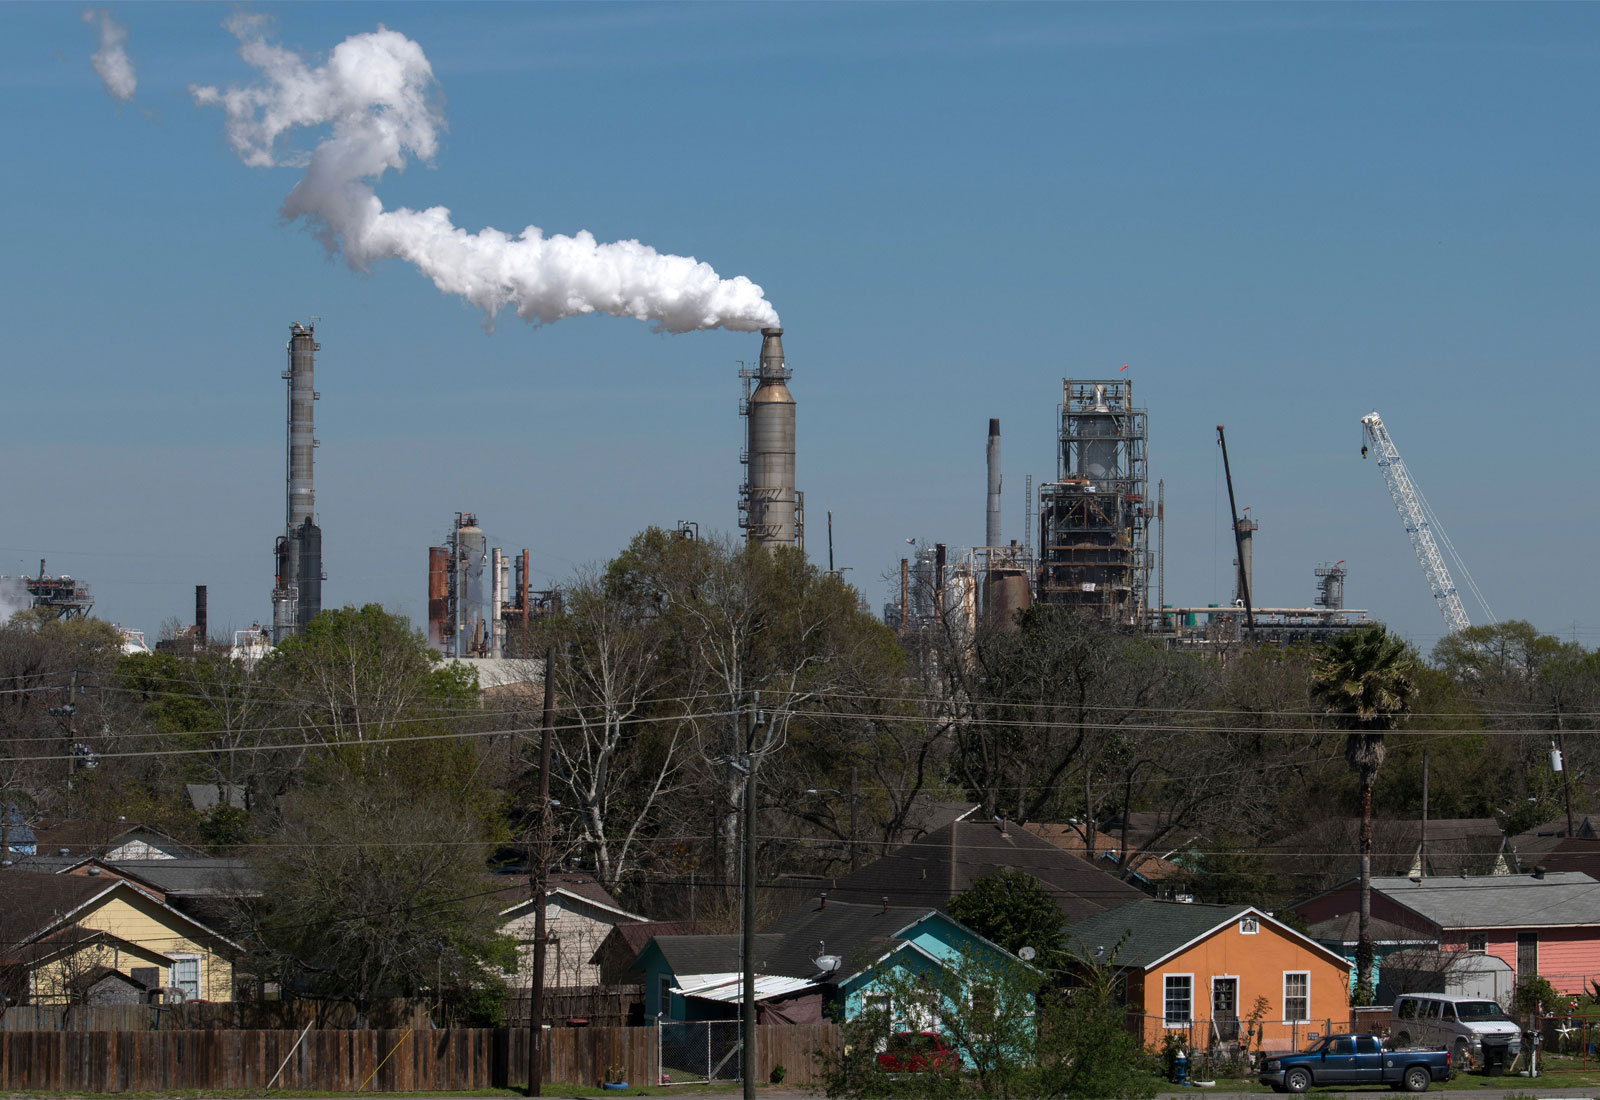 The Valero oil refinery in Houston, Texas